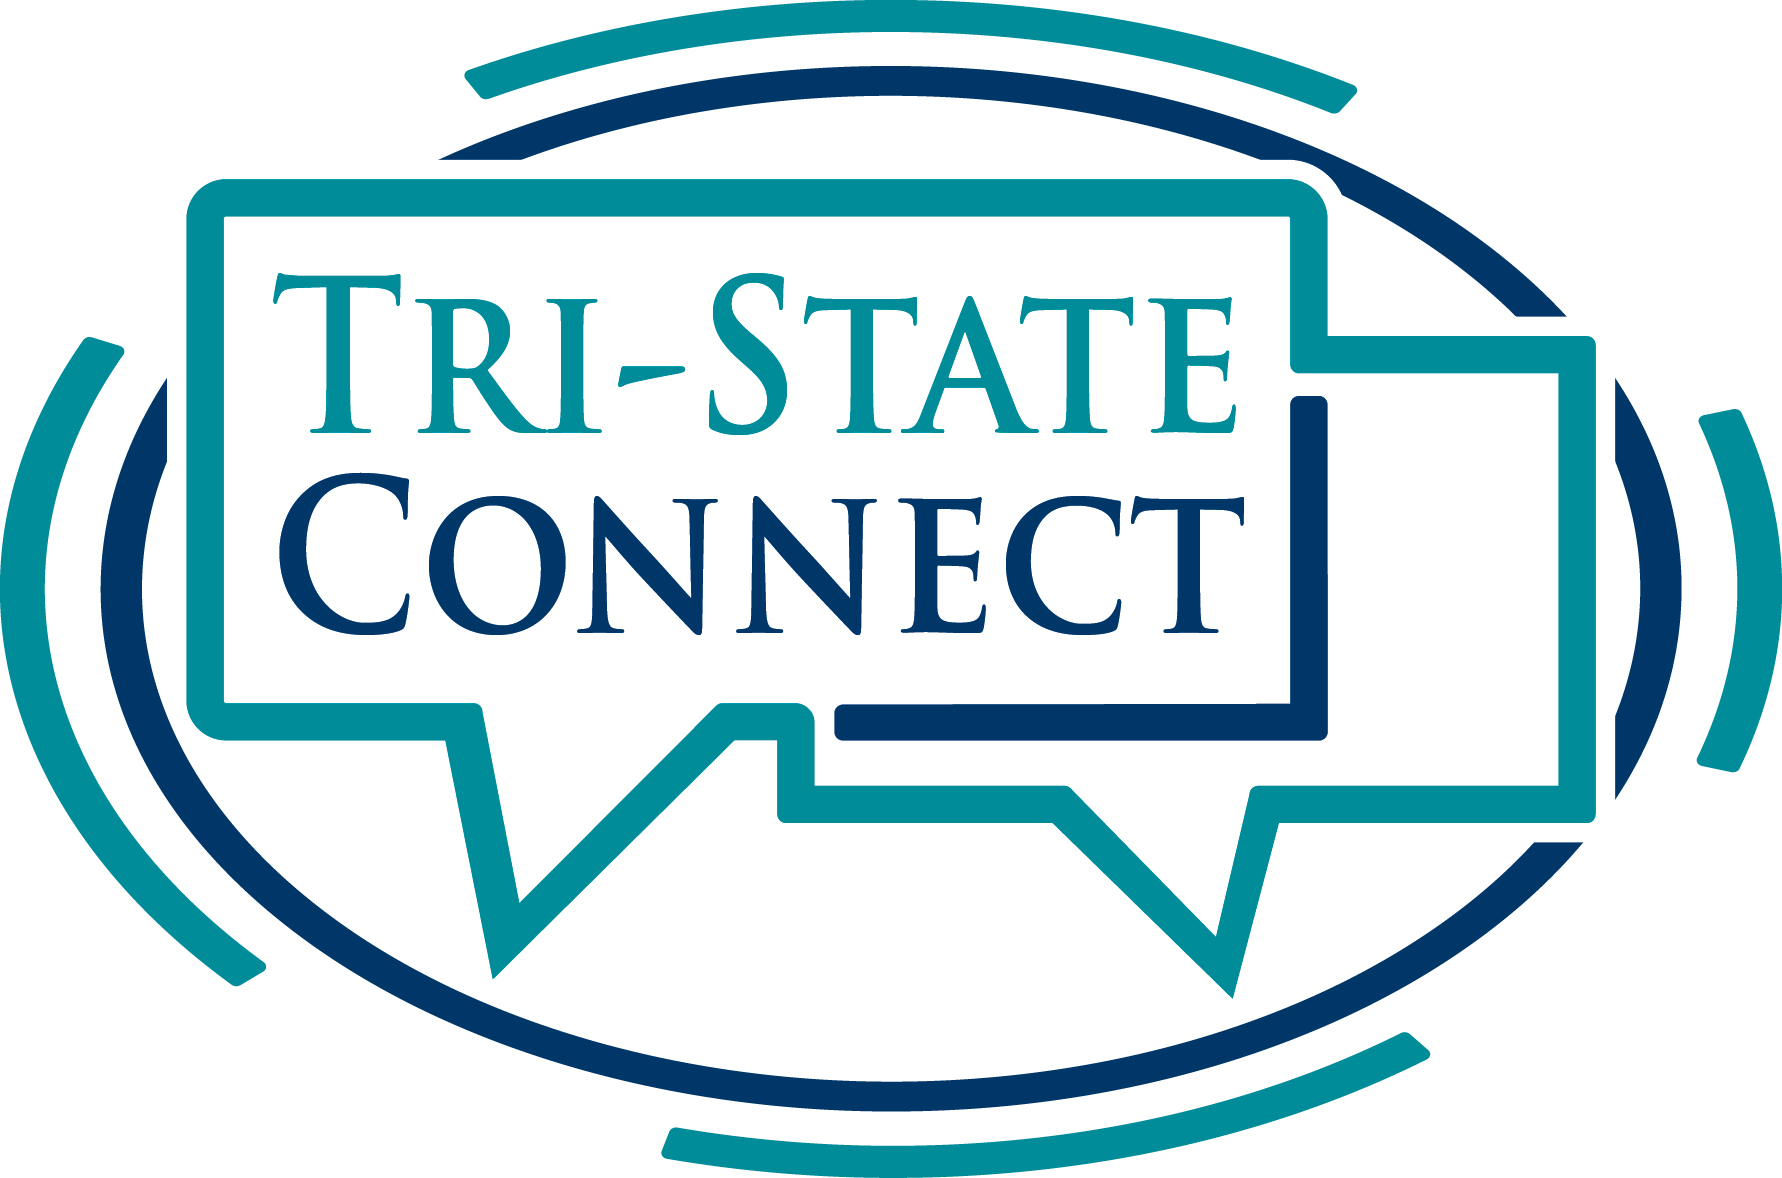 2017 Tri-State Connect logo